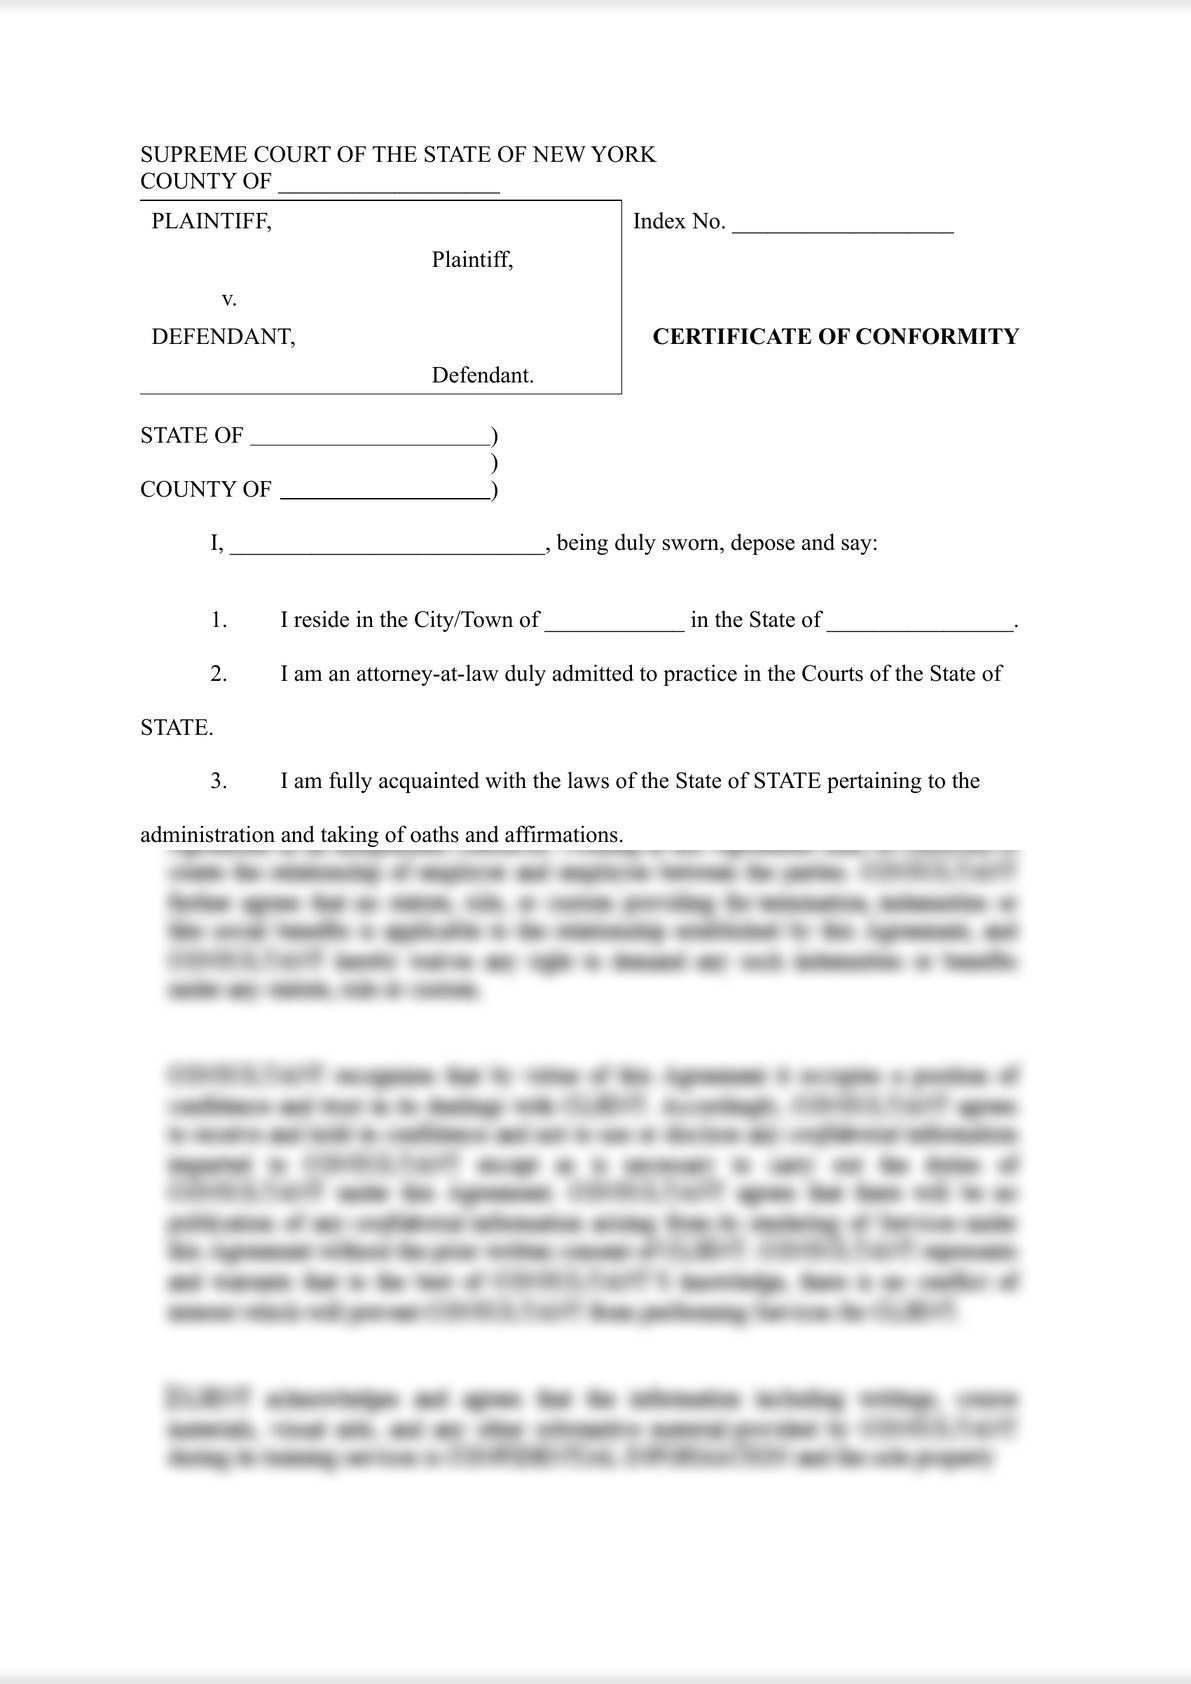 Certificate of Conformity - CPLR 2309(c)-0